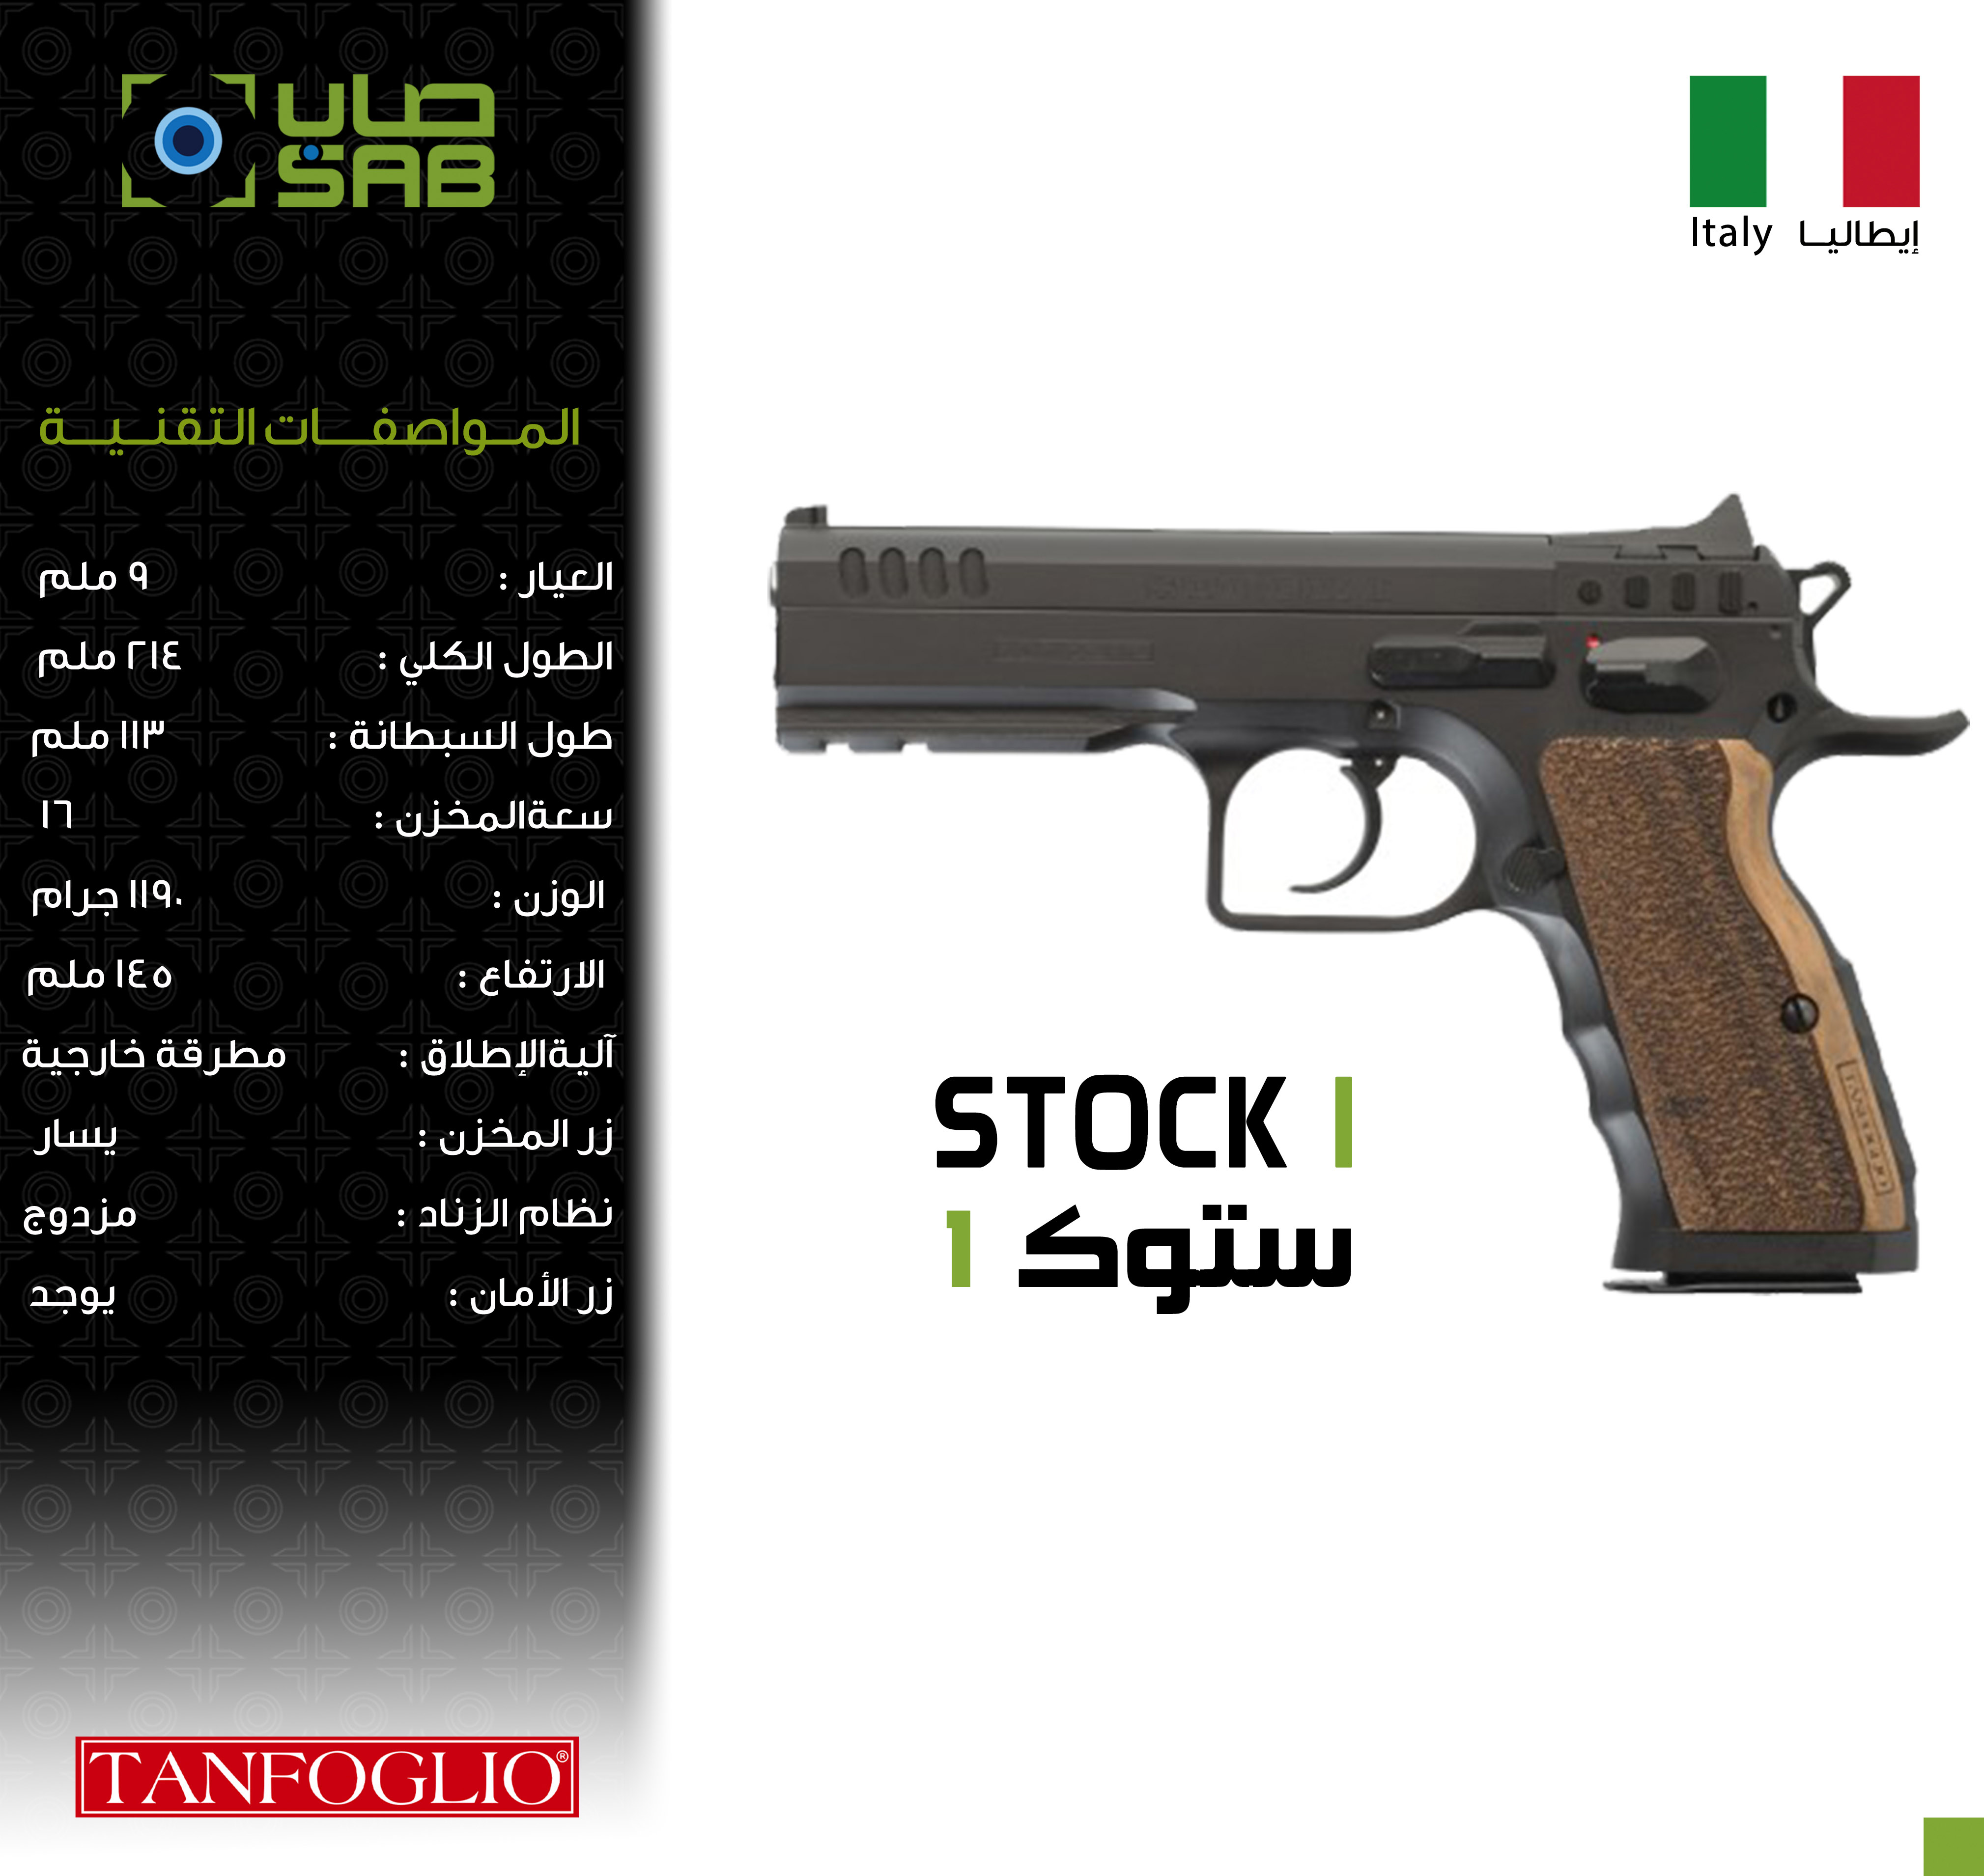  9mm - Tanfoglio - STOCK 1